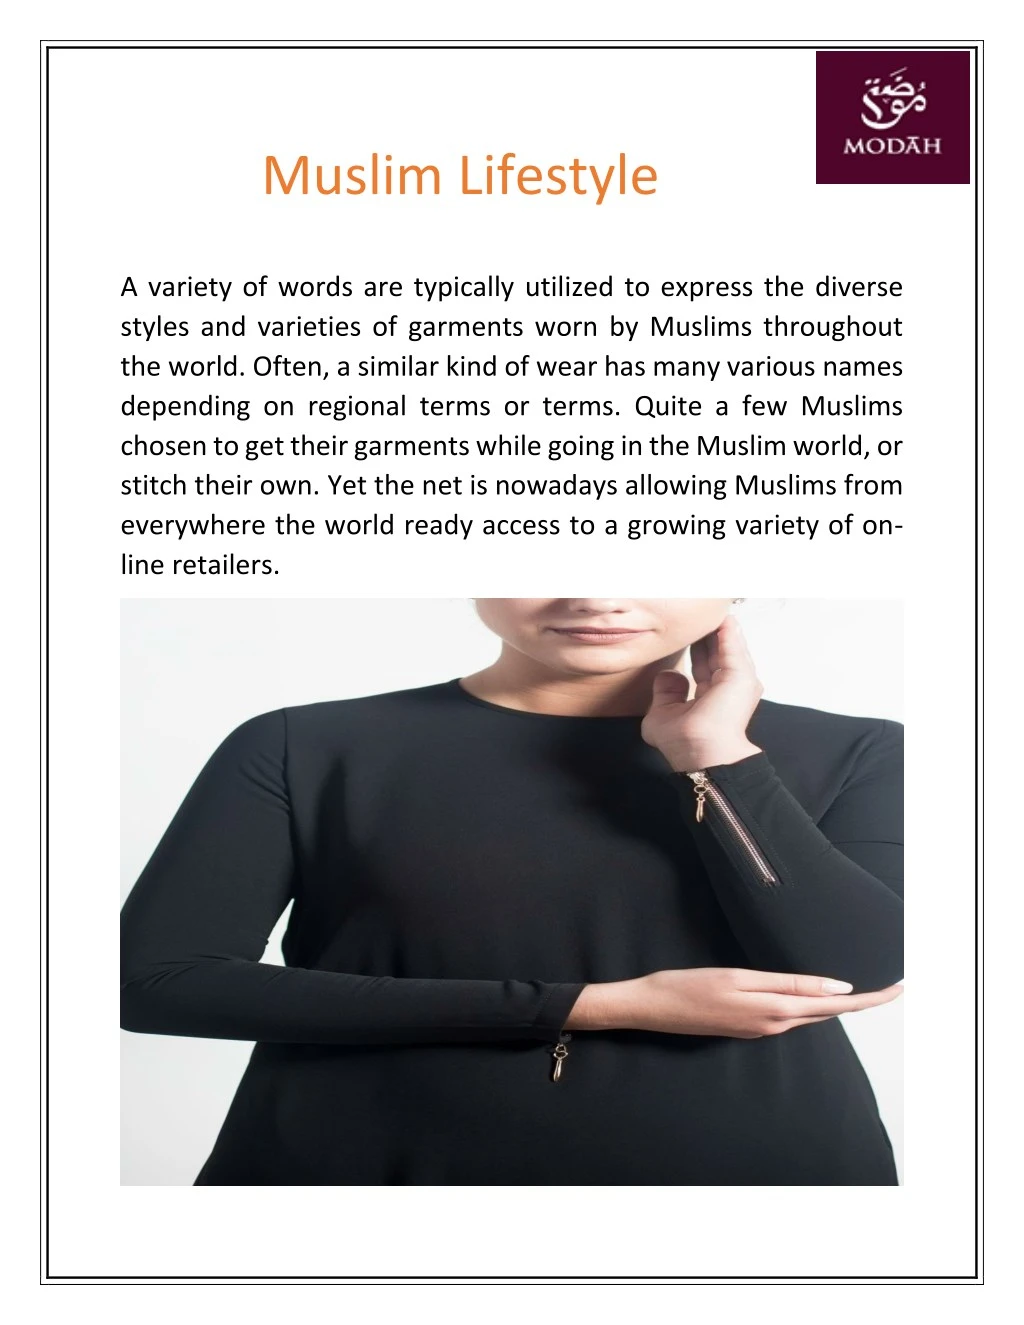 muslim lifestyle